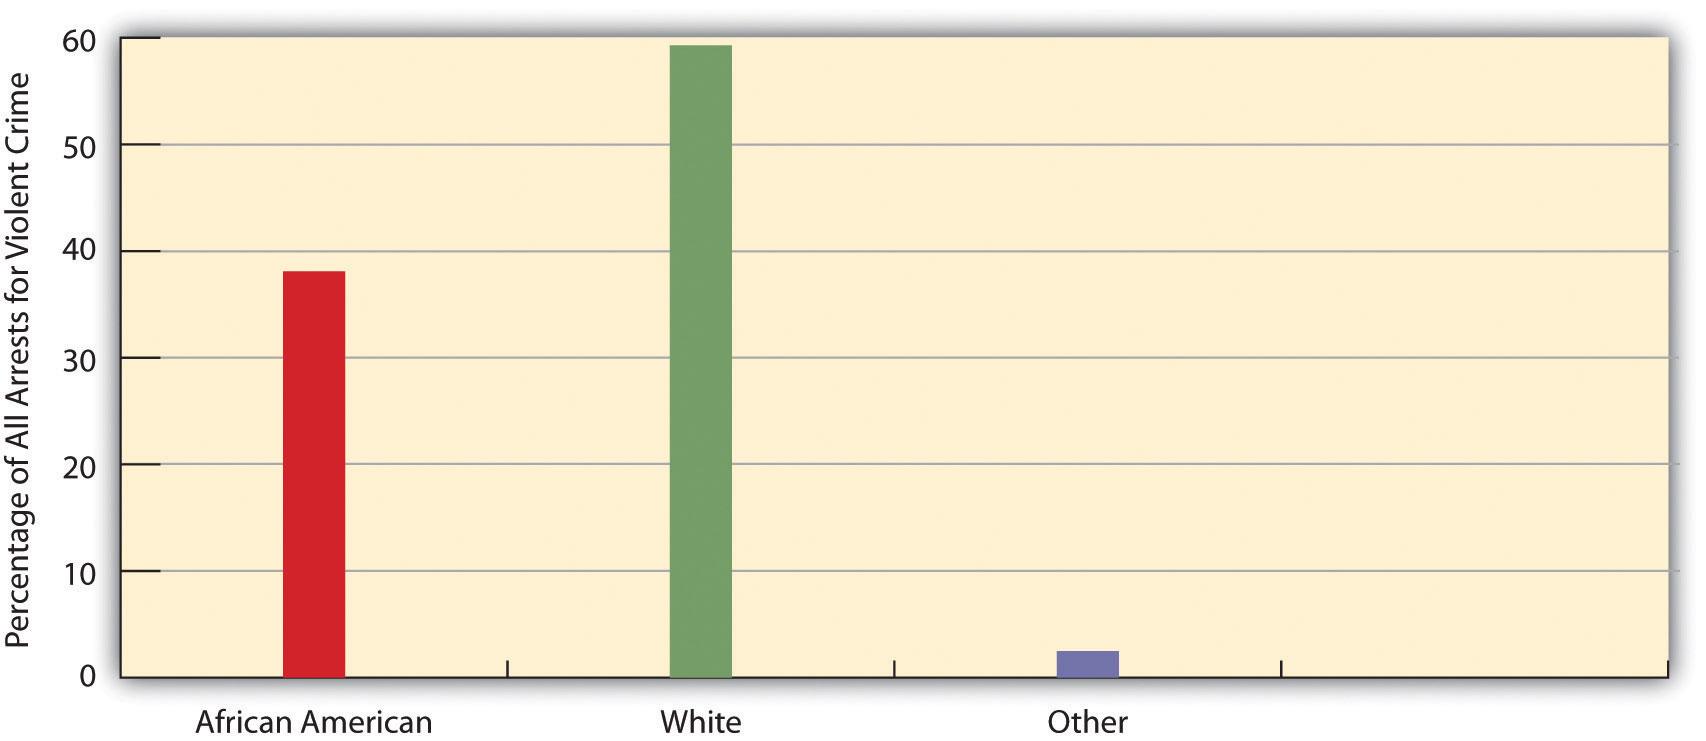 Graph depicting percentage of arrests for violent crimes by race. 
White: ~60%
Black: ~38%
Other: ~3%  